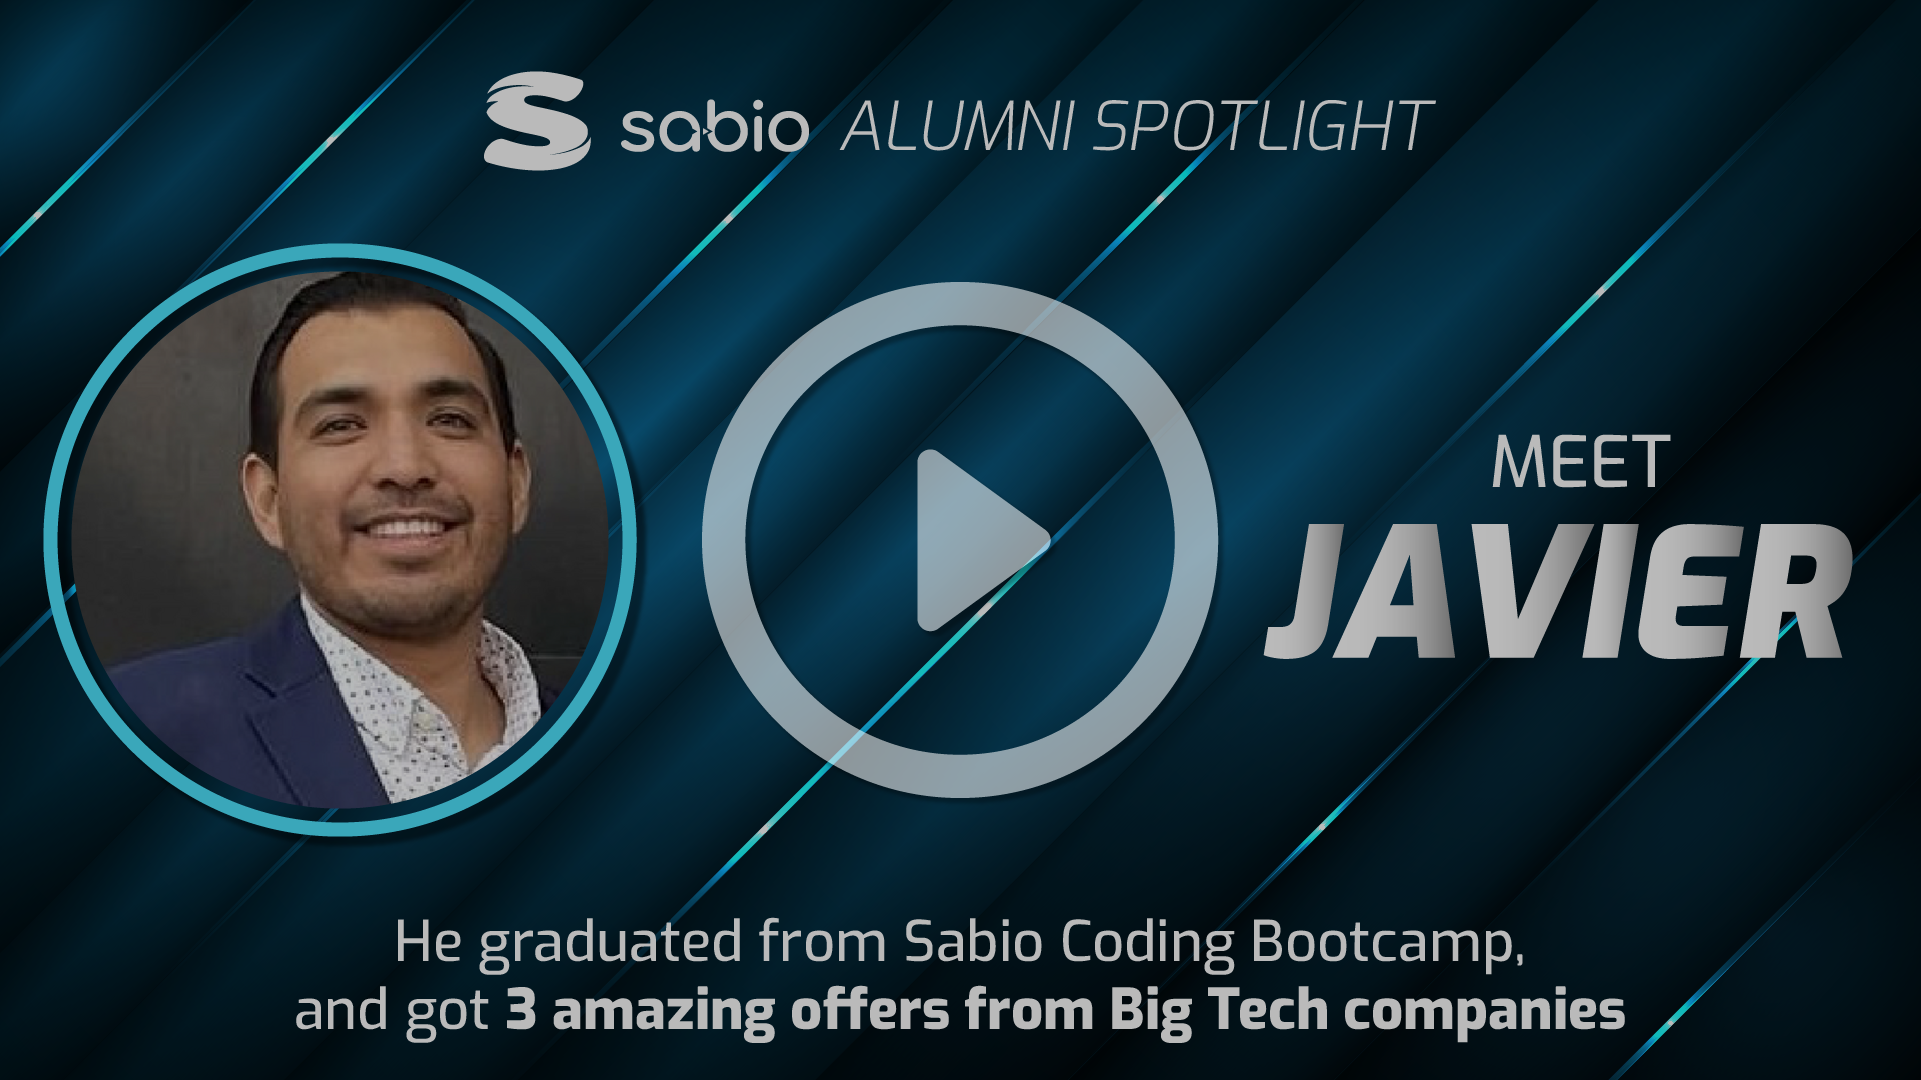 Sabio Alumni Spotlight: Javier. Play symbol overlaid to the image.